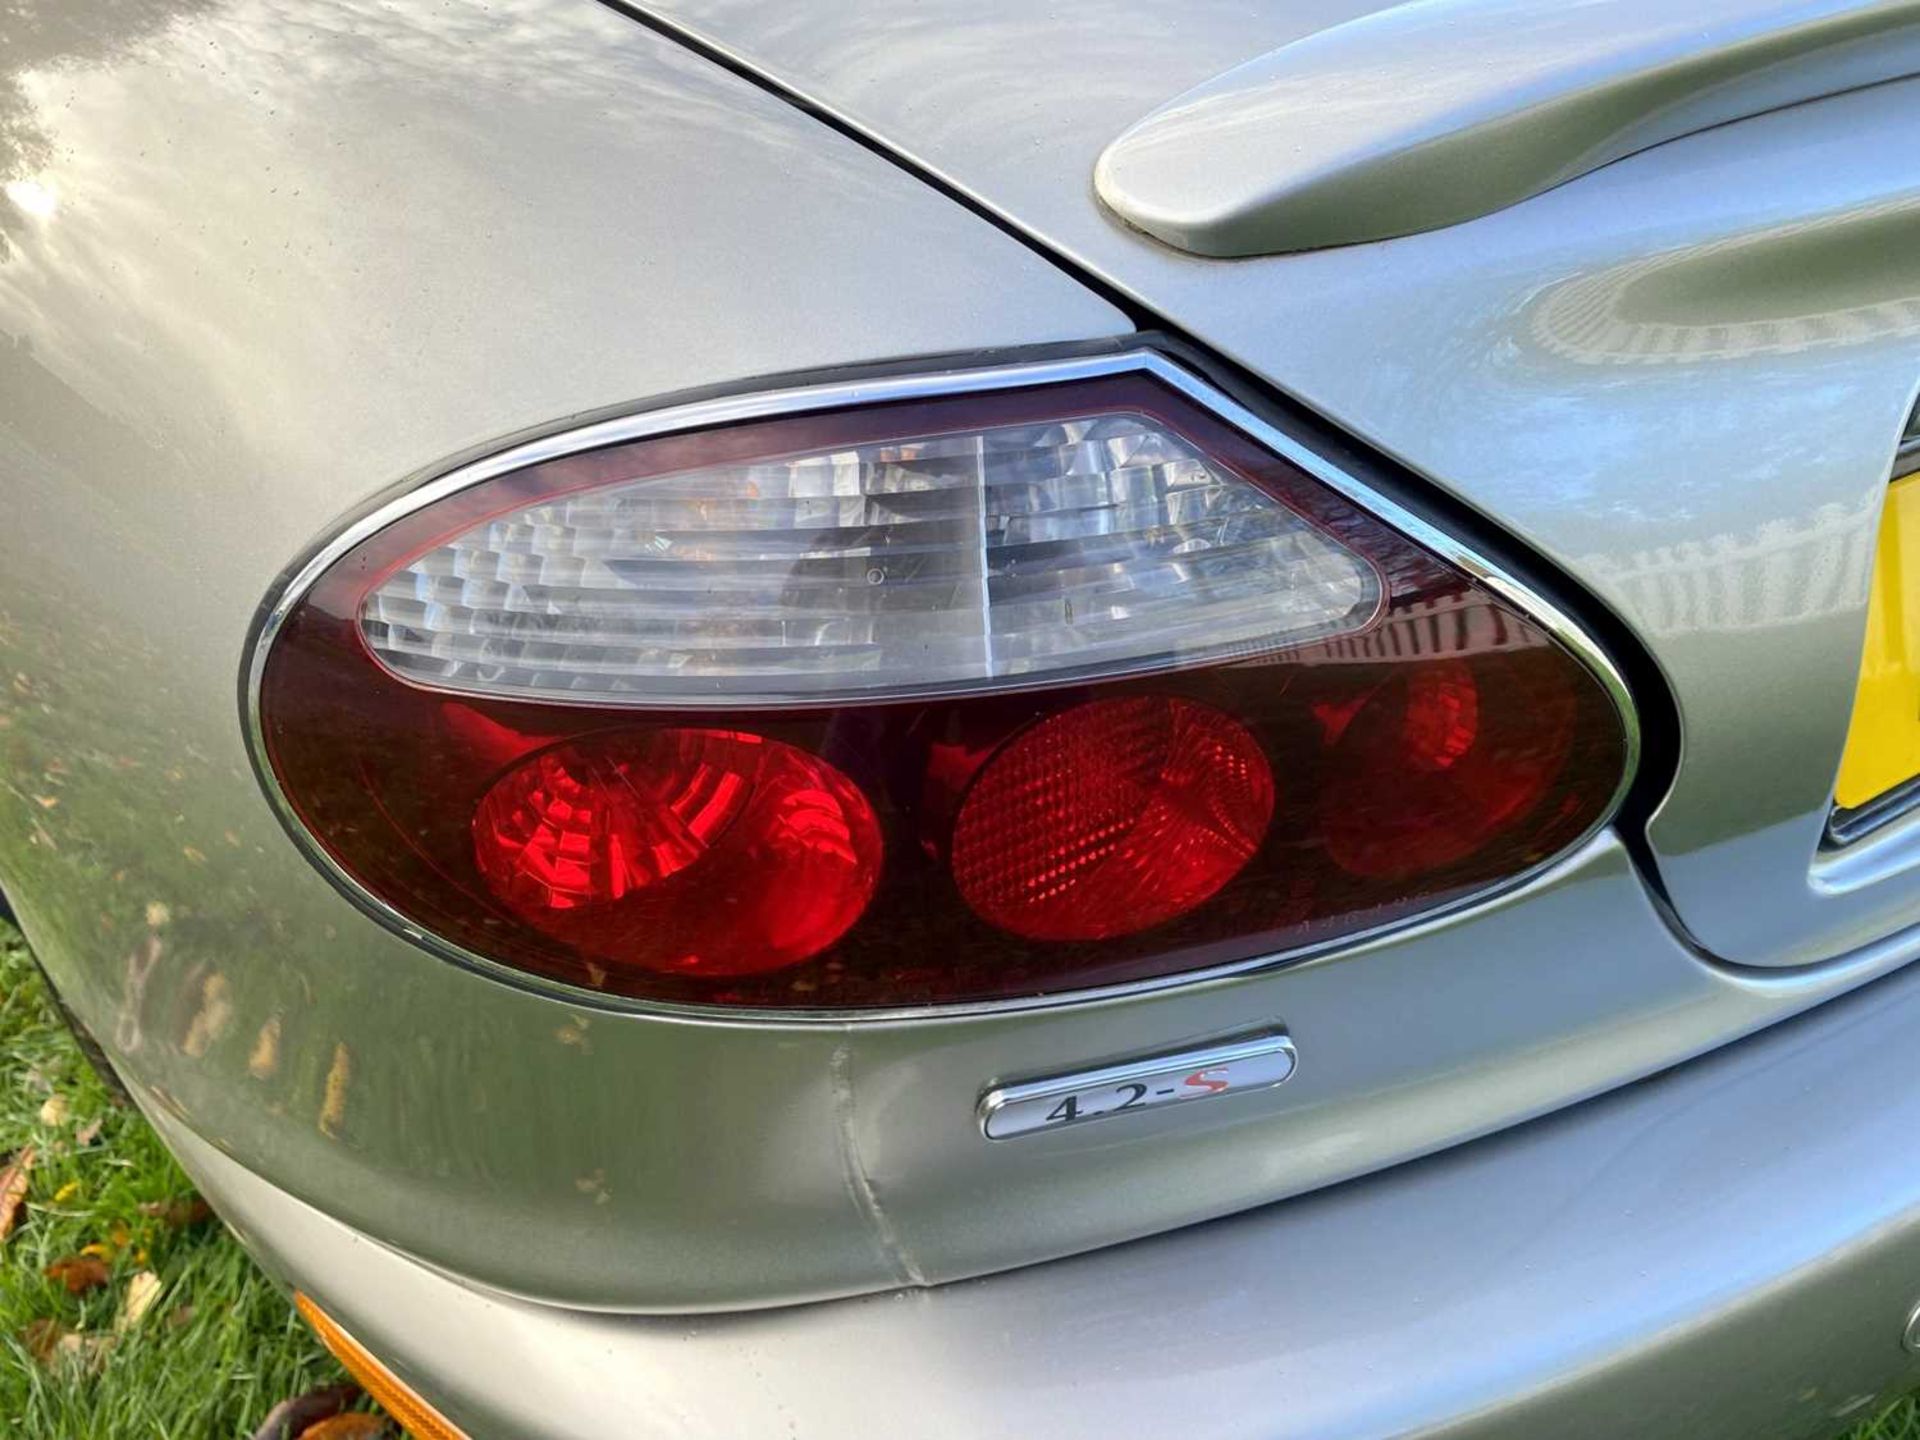 2005 Jaguar XK8 4.2 S Convertible Rare, limited edition model - Image 88 of 100